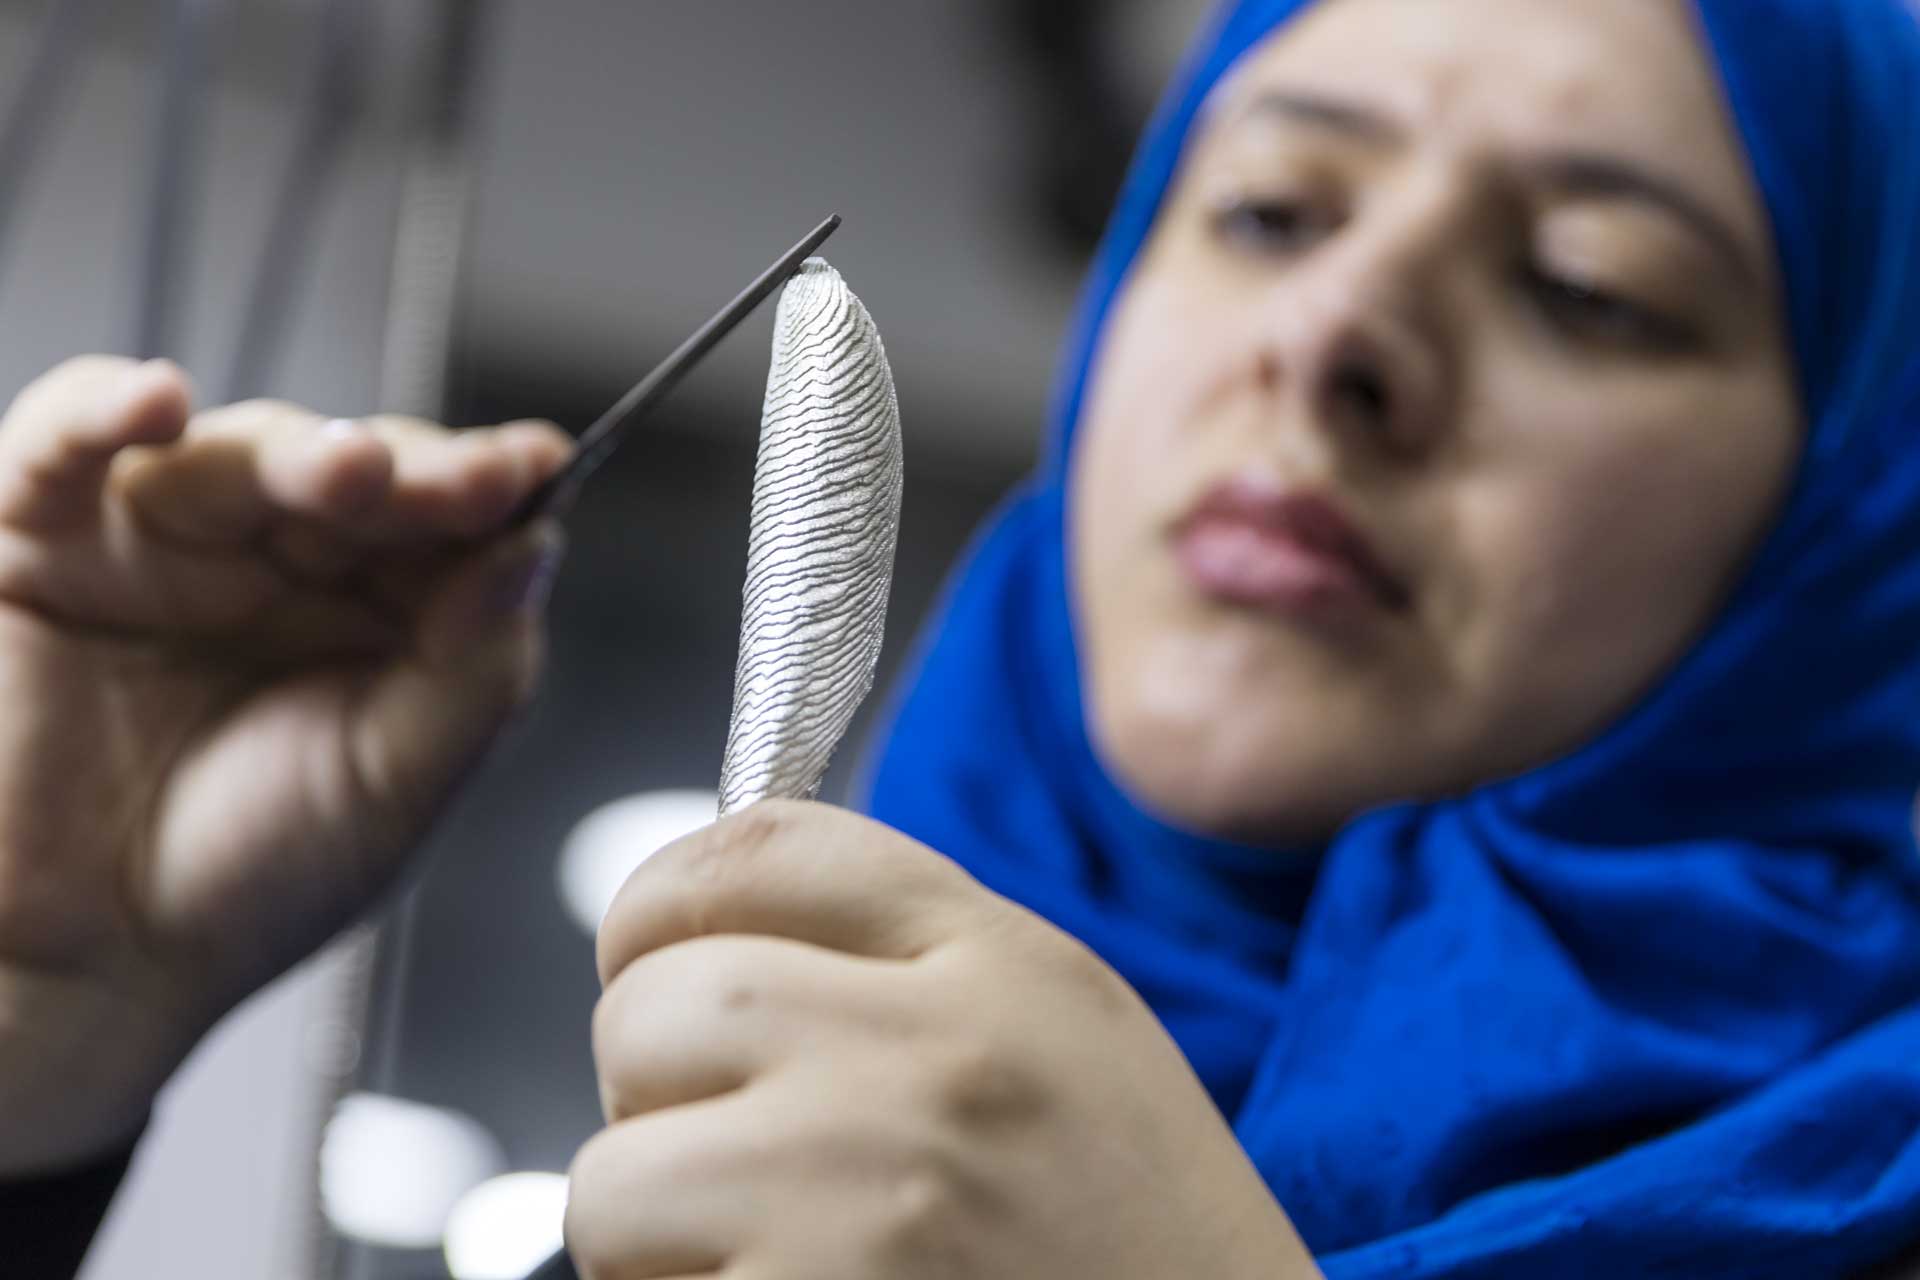 Azza Al Qubaisi, an Emirati jeweller, filing an object